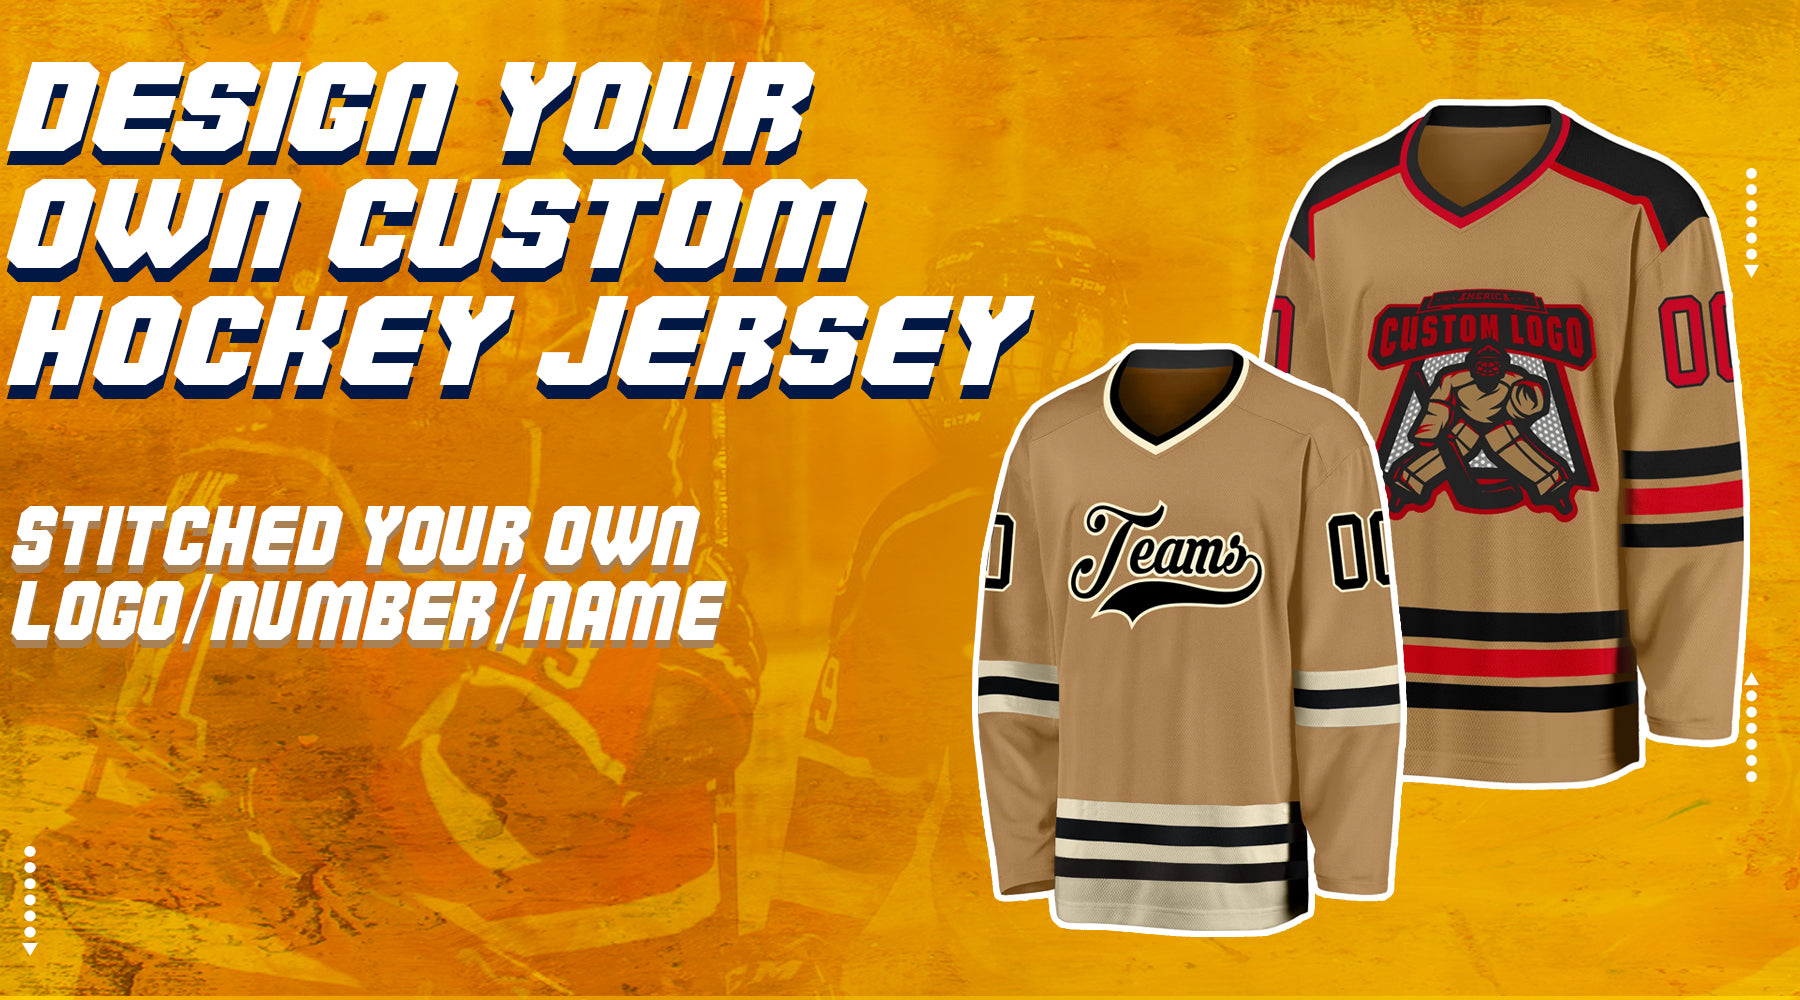 custom hockey old gold jersey